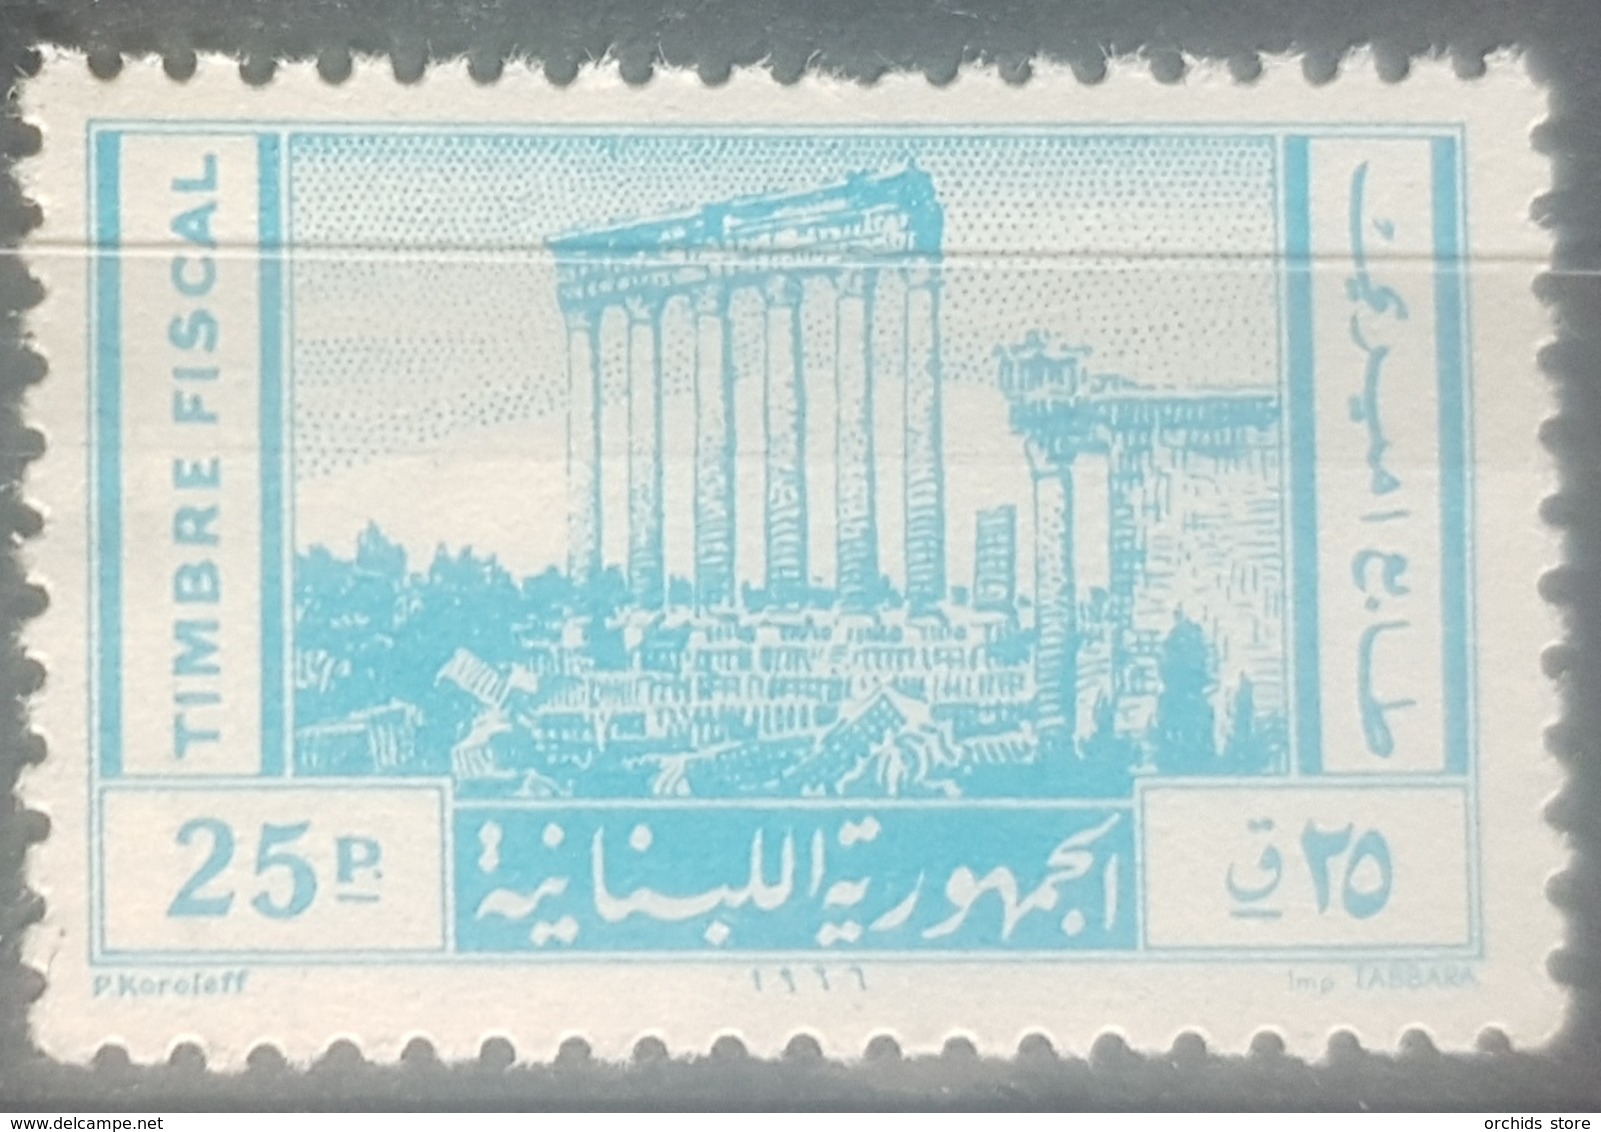 Lebanon 1966 Baalbeck Ruins Design Fiscal Revenue Stamp - 25p Blue - MNH - Lebanon